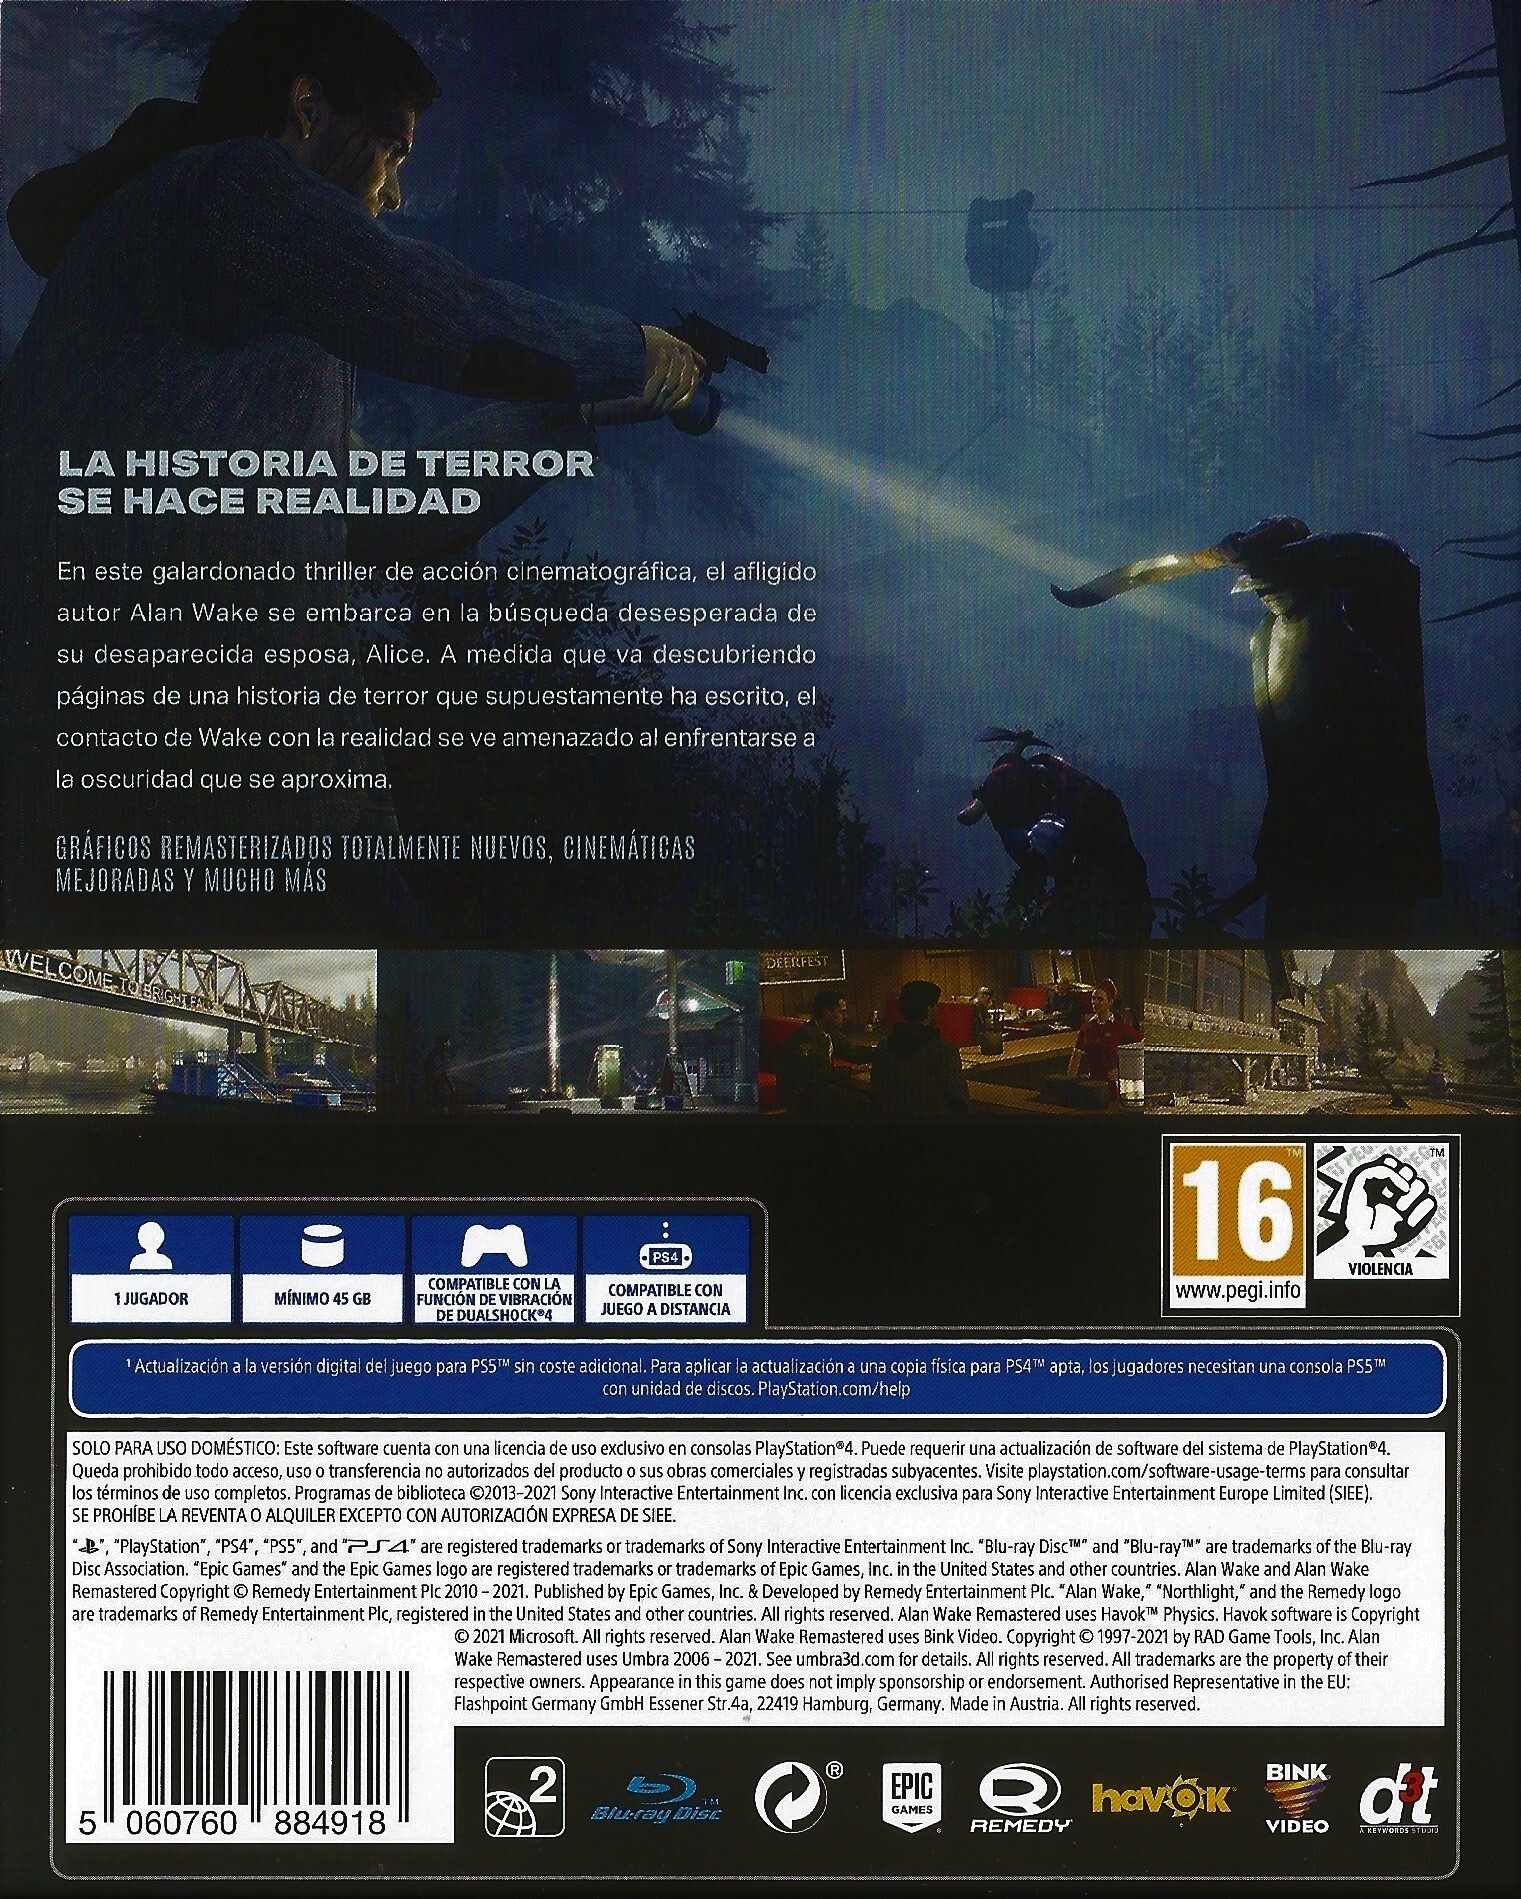 Alan Wake Remastered - PlayStation 4